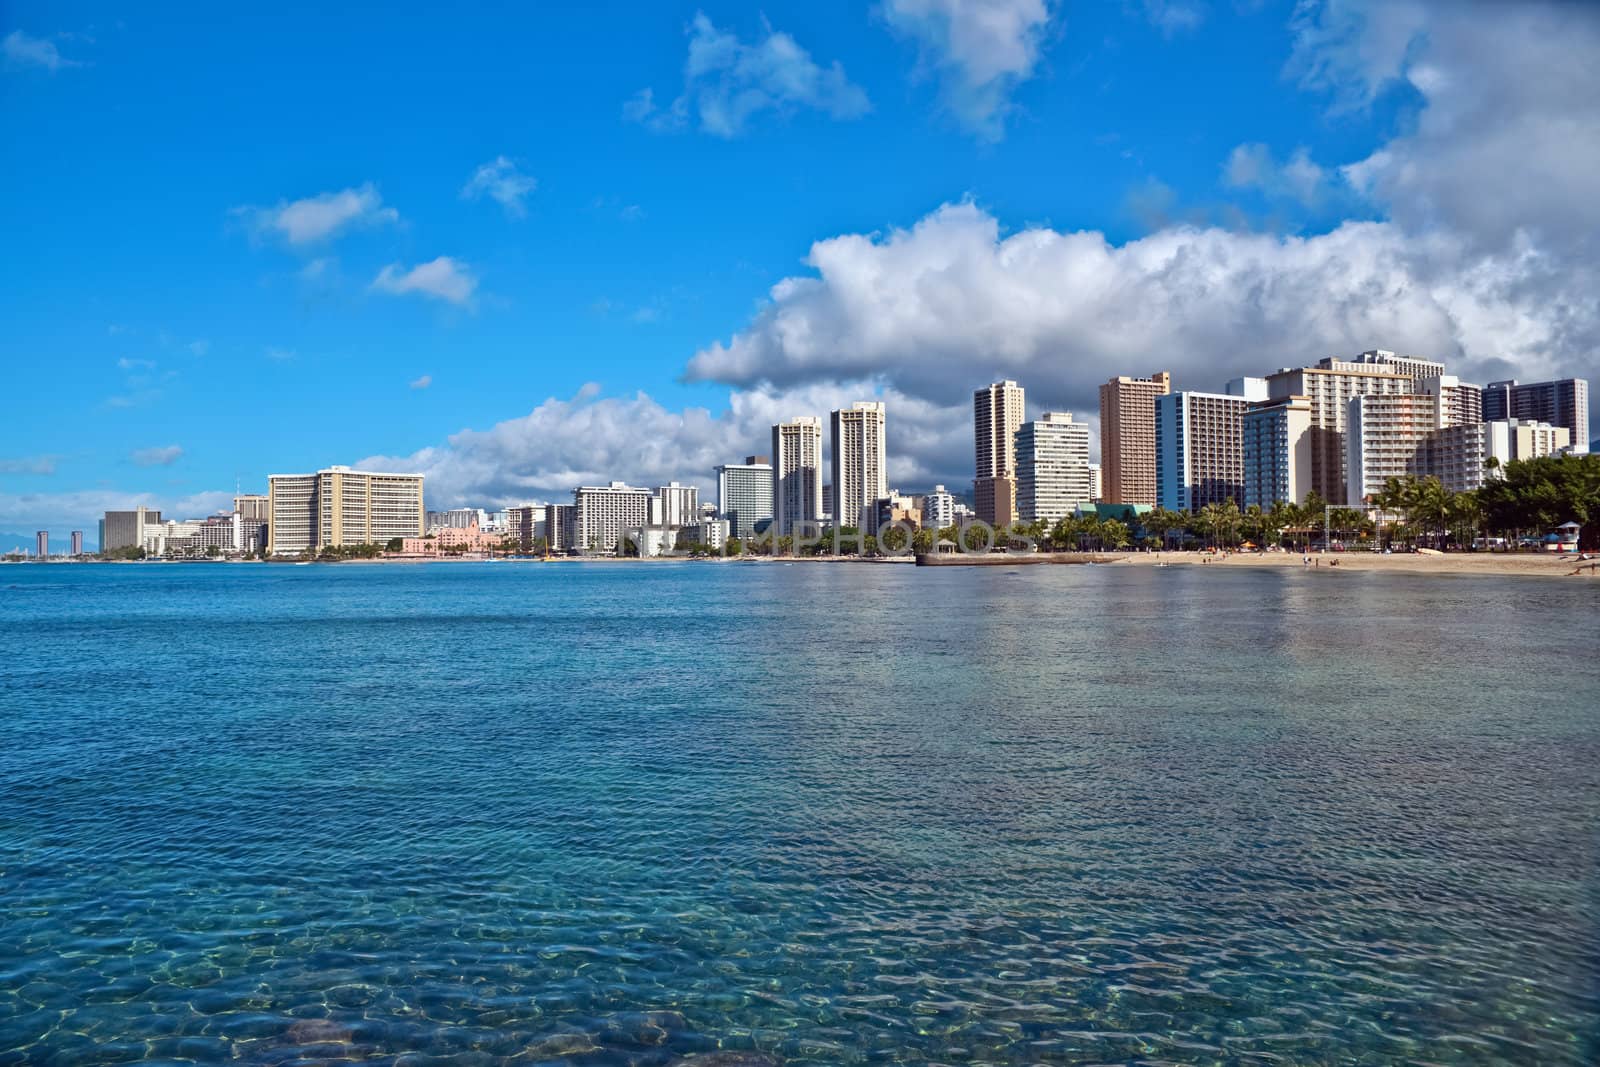 Waikiki Beach, Oahu Island Hawaii, cityscape by Marcus